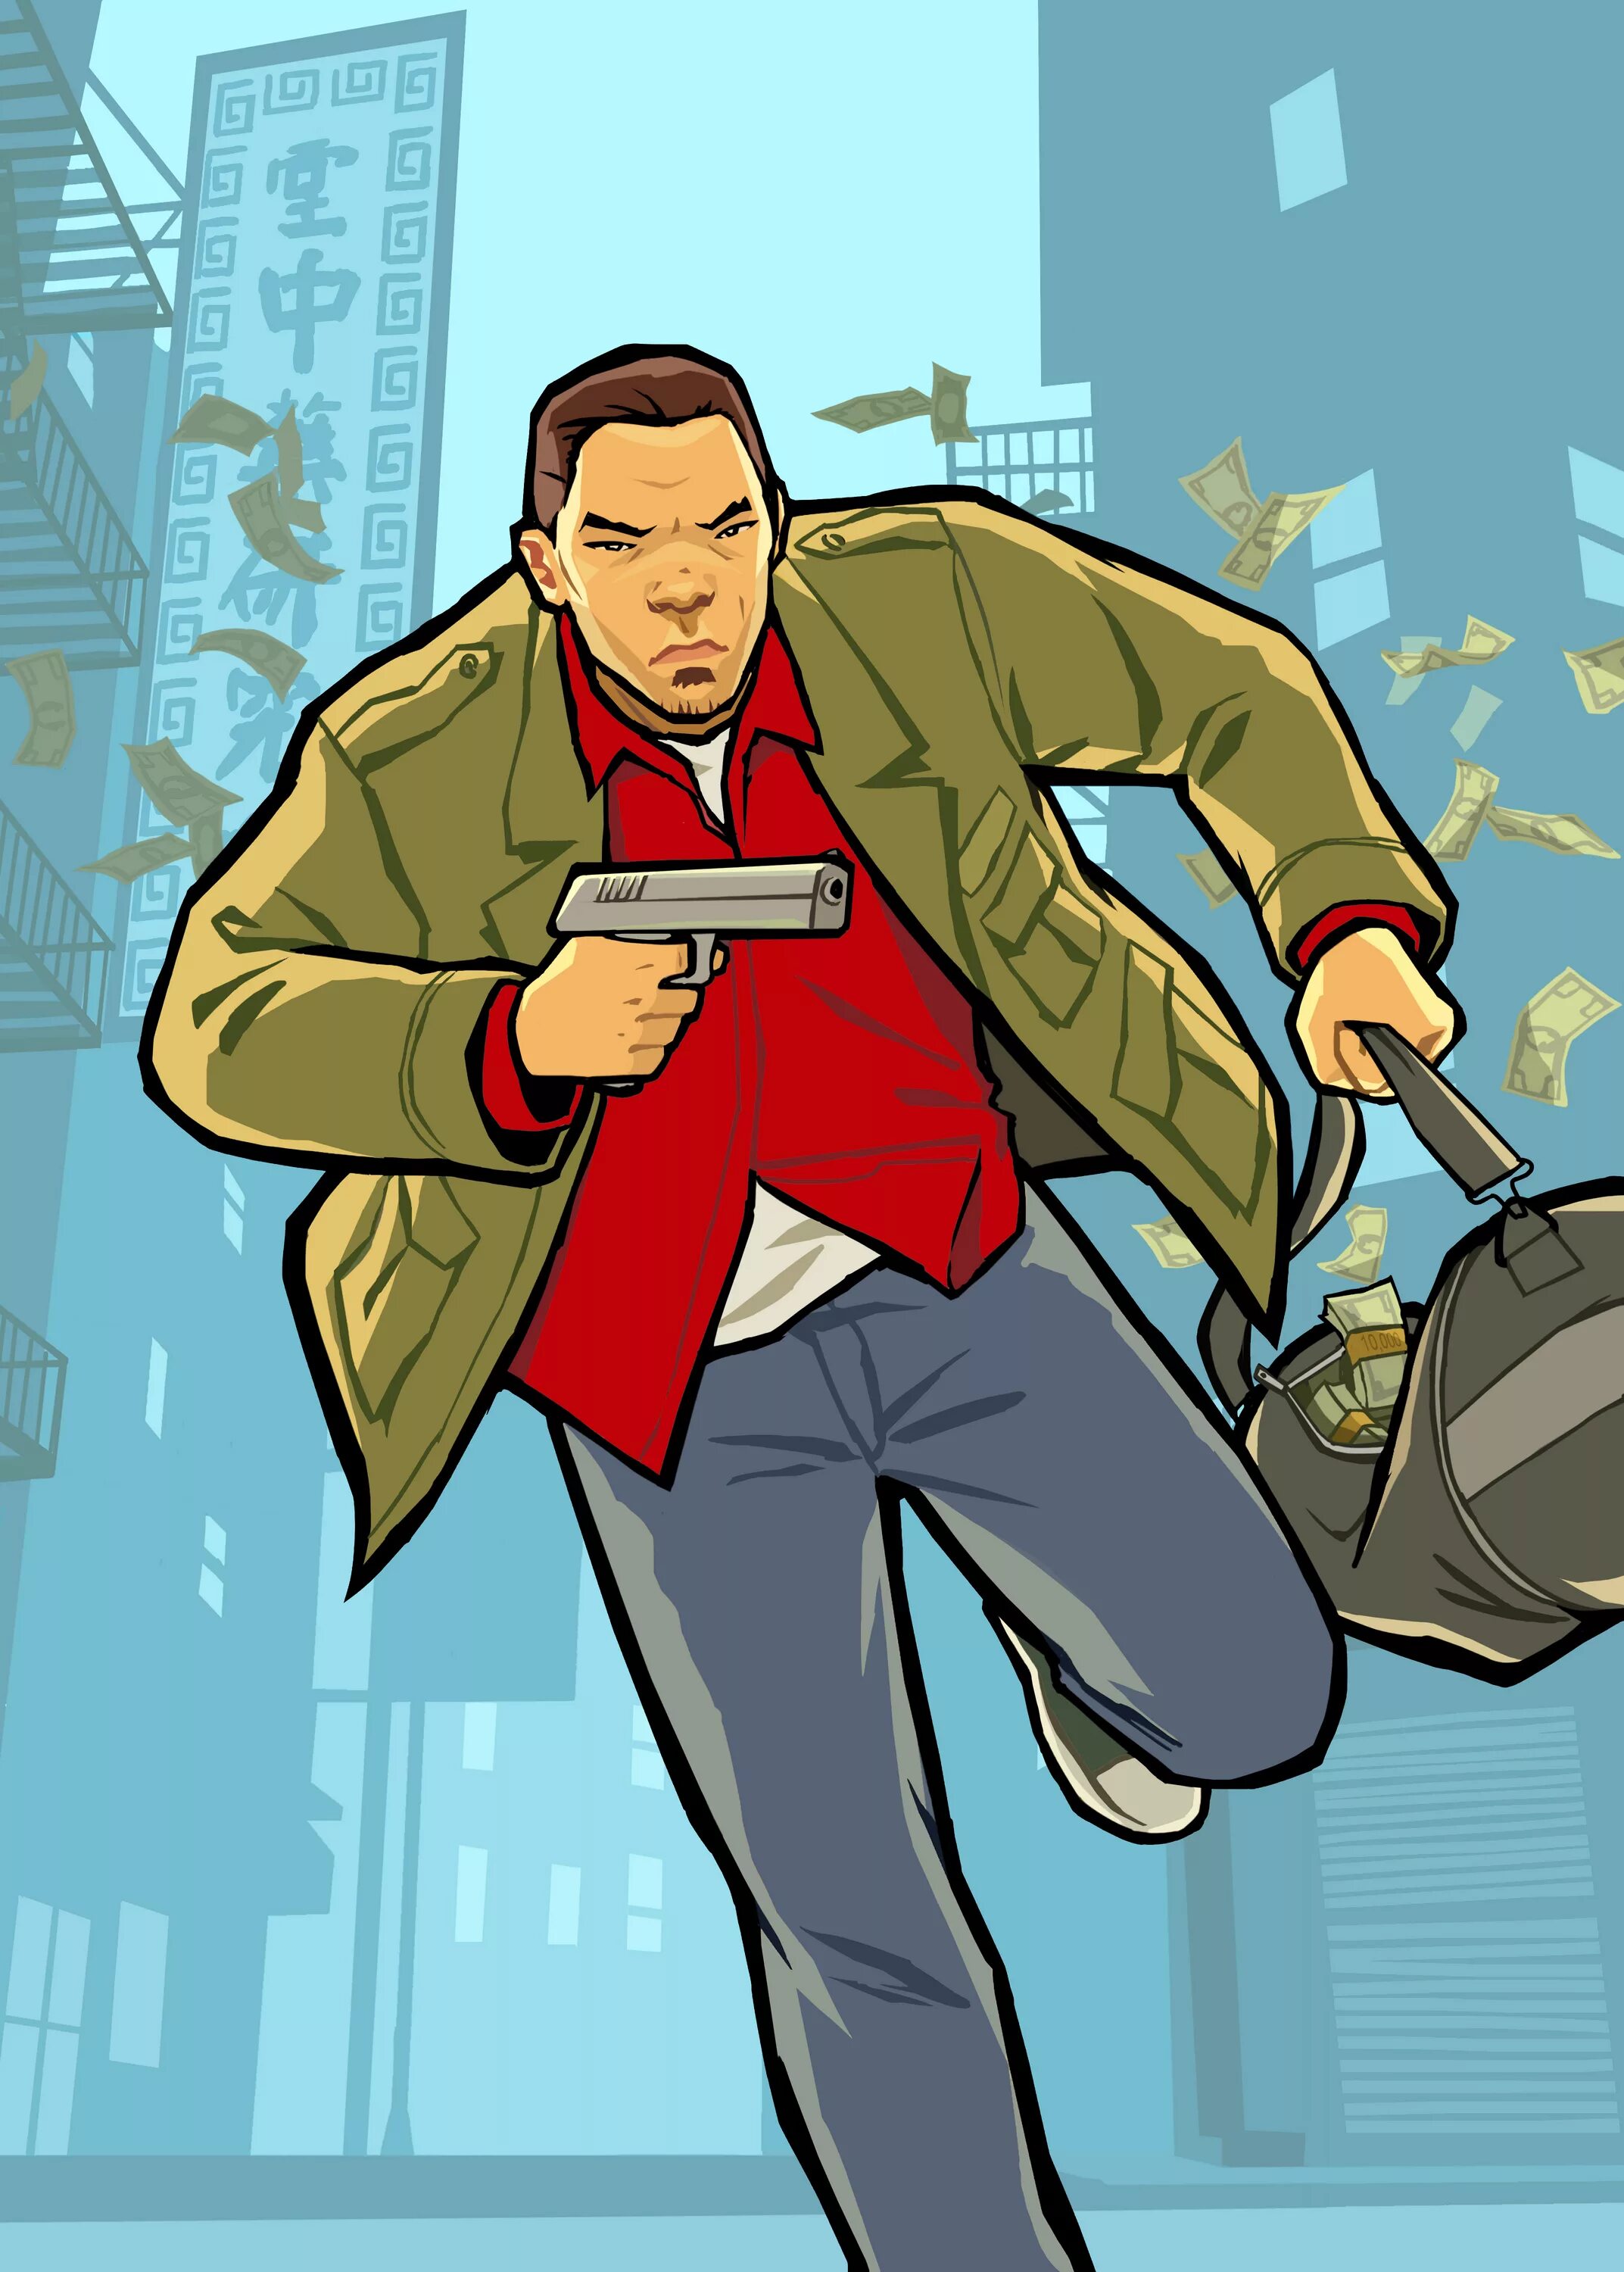 User gta. Grand Theft auto: Chinatown Wars. GTA Huang Lee. GTA Chinatown Wars Huang Lee Art. GTA 4 Chinatown Wars.